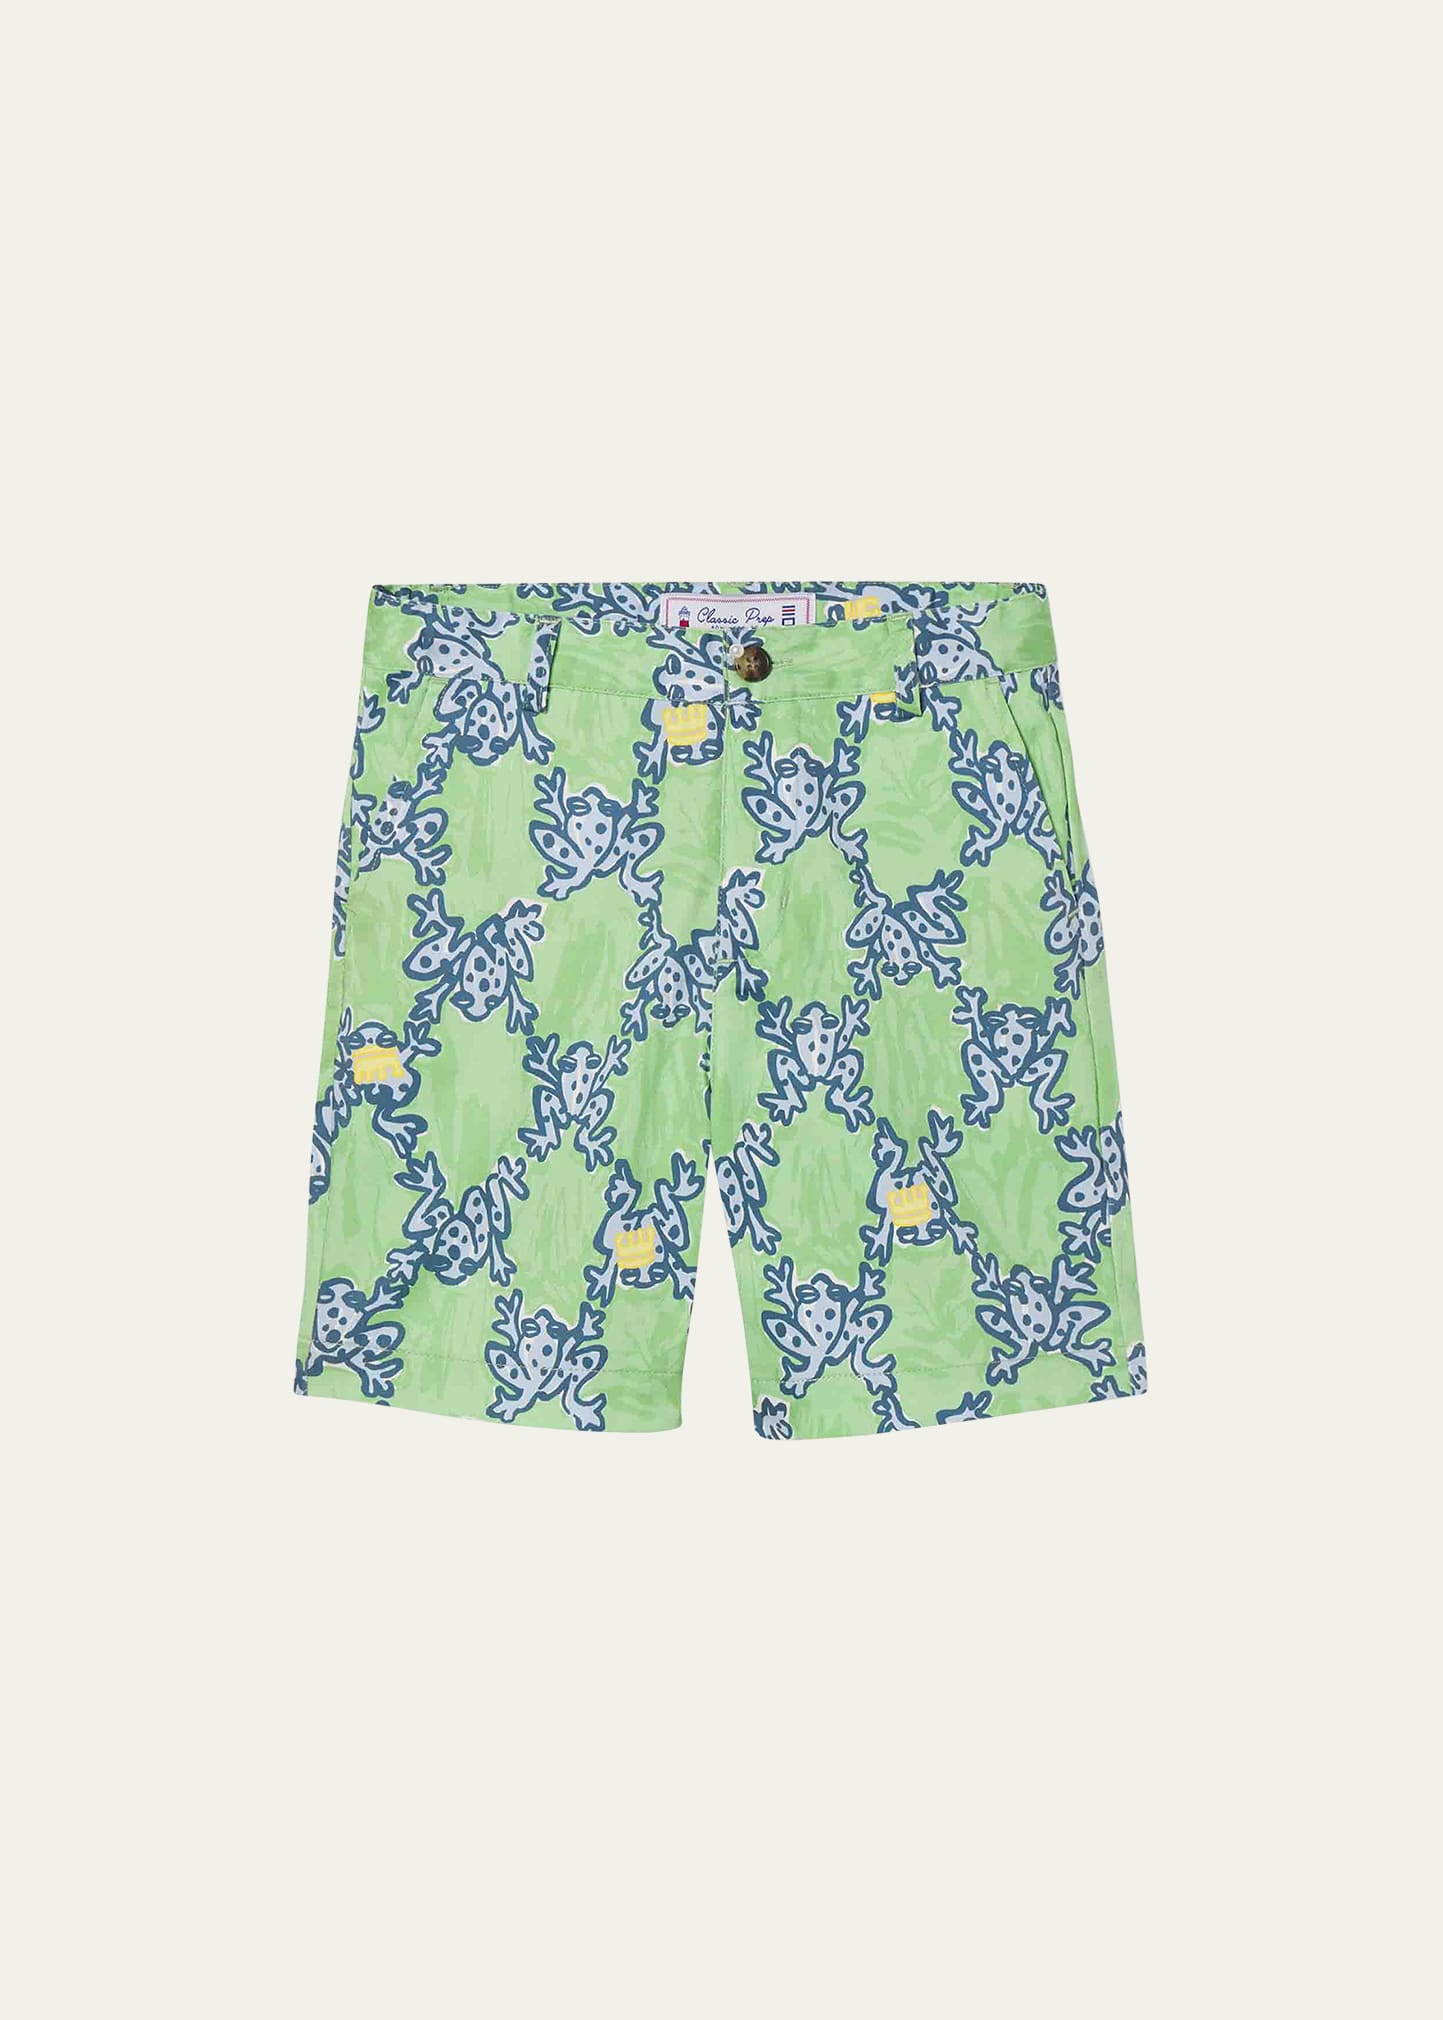 Boy's Hudson Shorts - Frog and Prince Print, Size 5-8